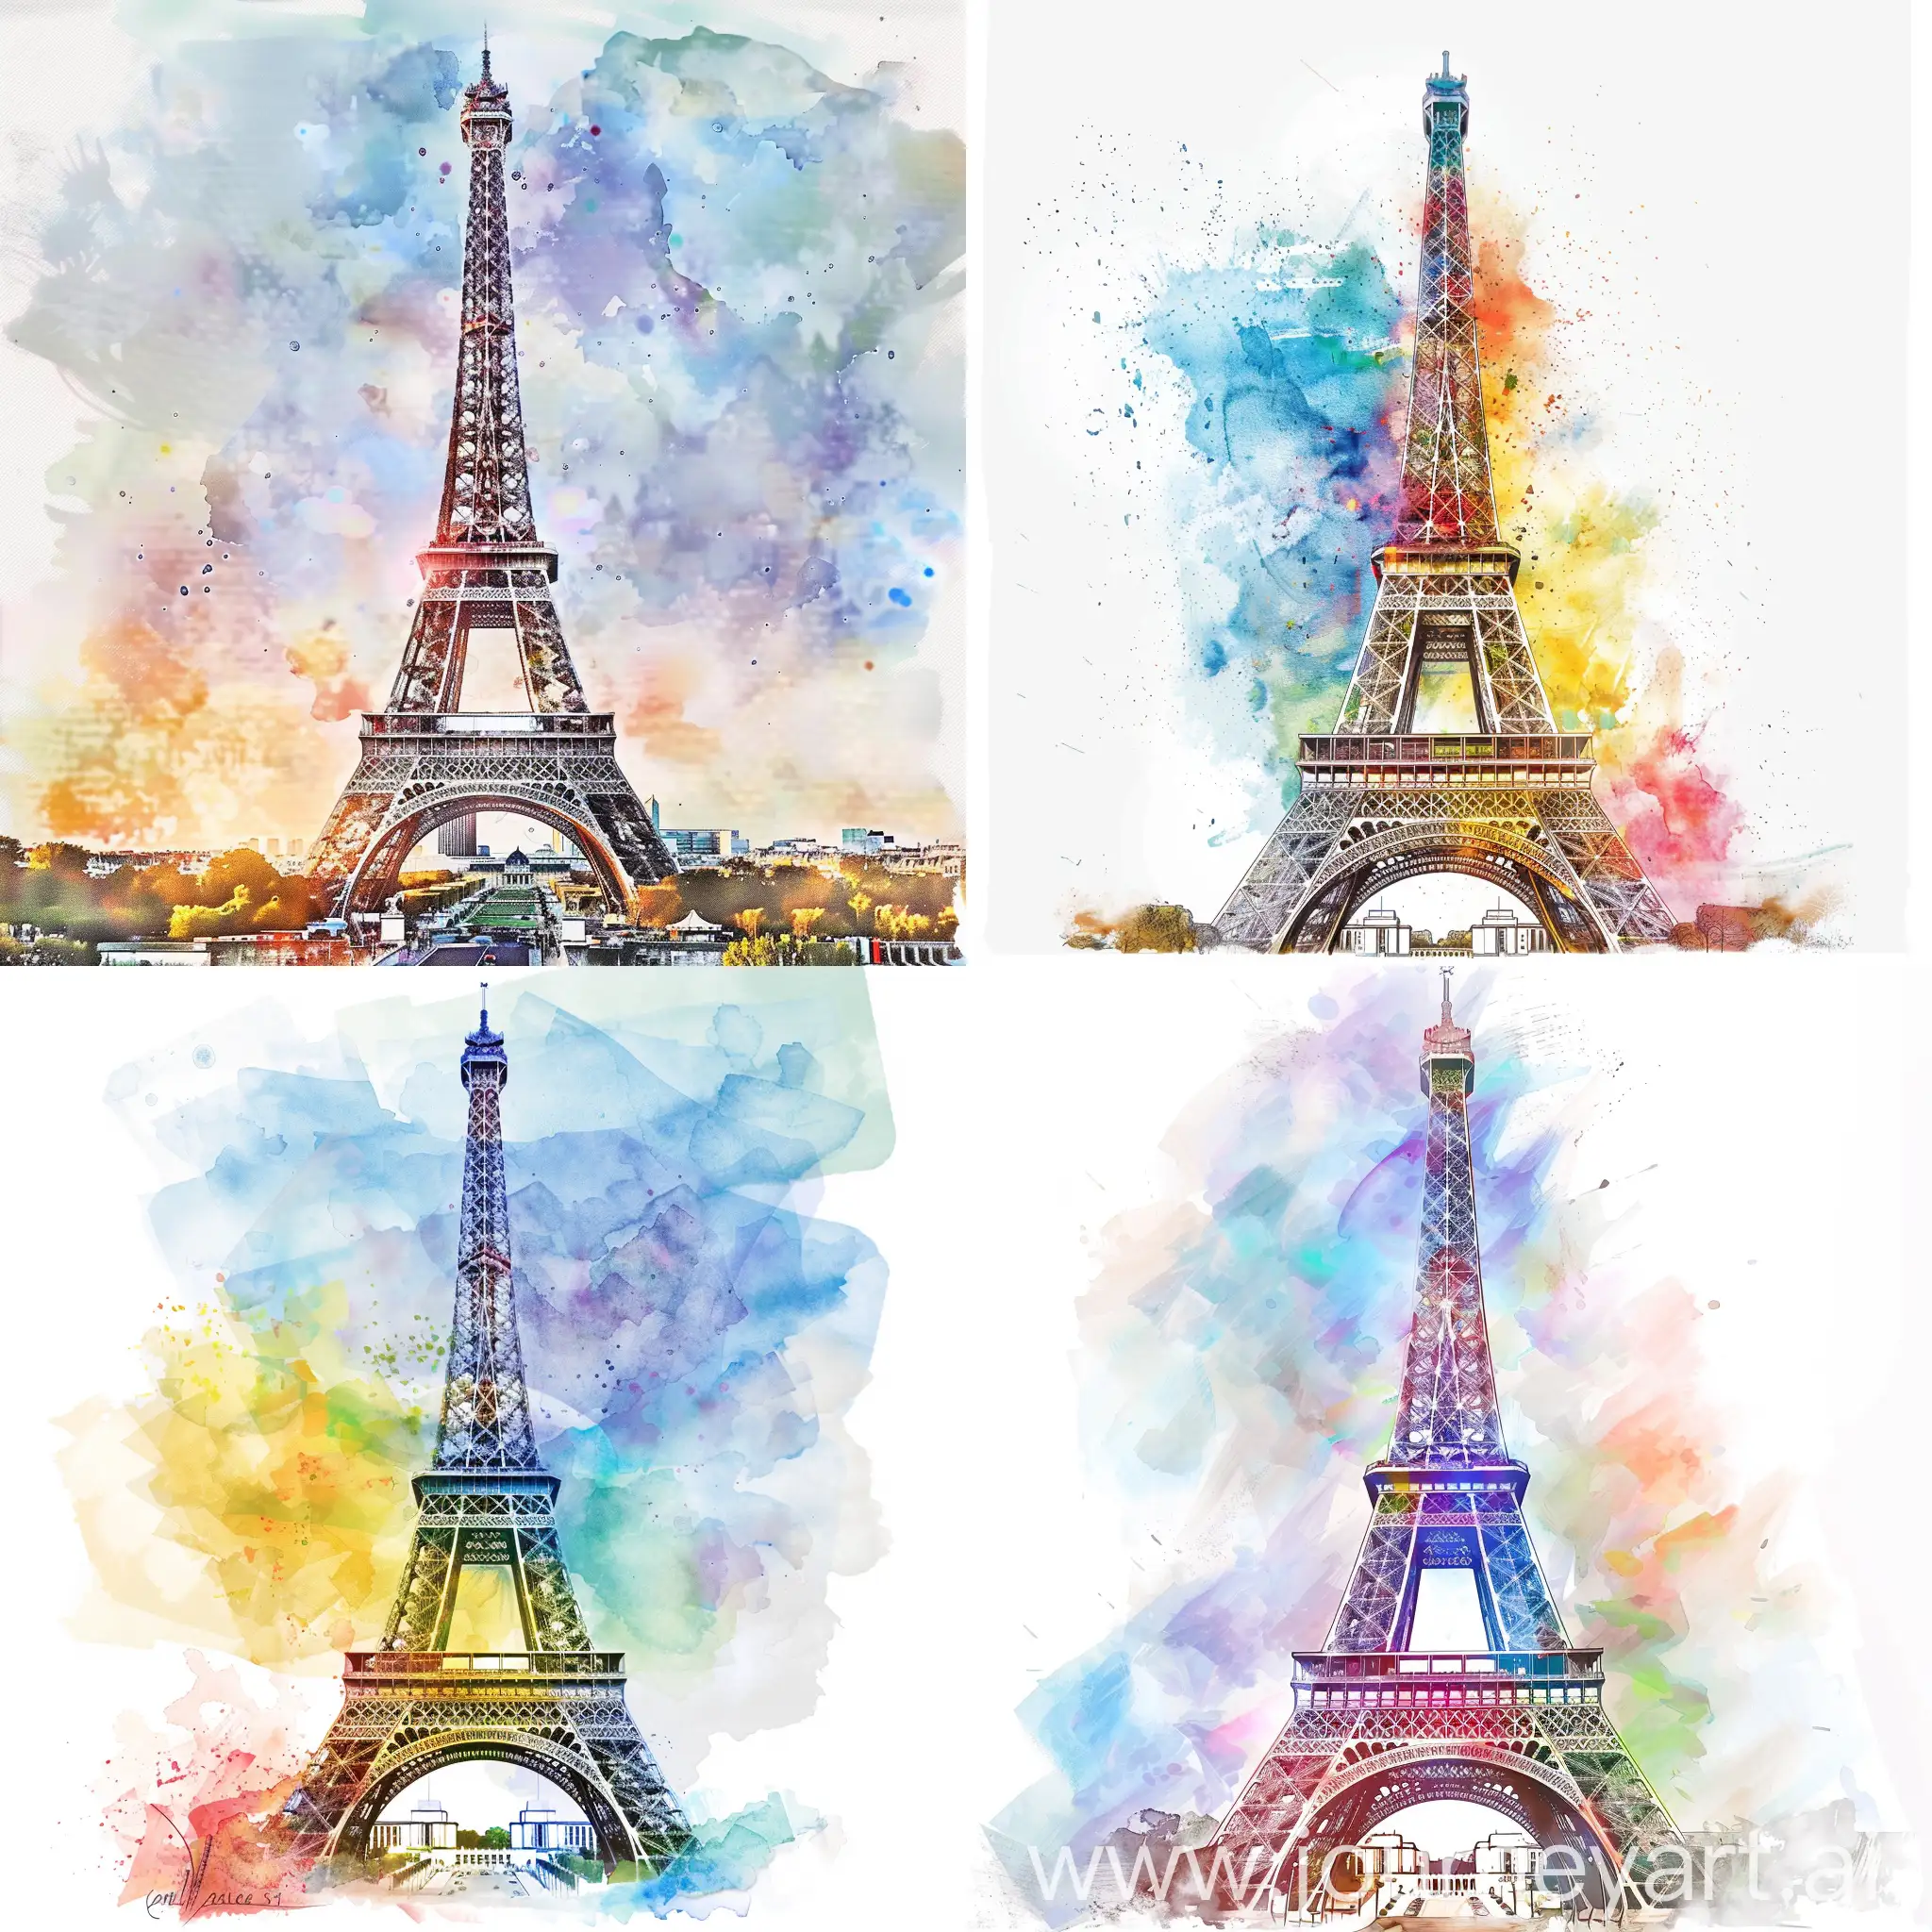 Eiffel-Tower-Watercolor-Painting-Iconic-Parisian-Landmark-in-Serene-Watercolor-Style